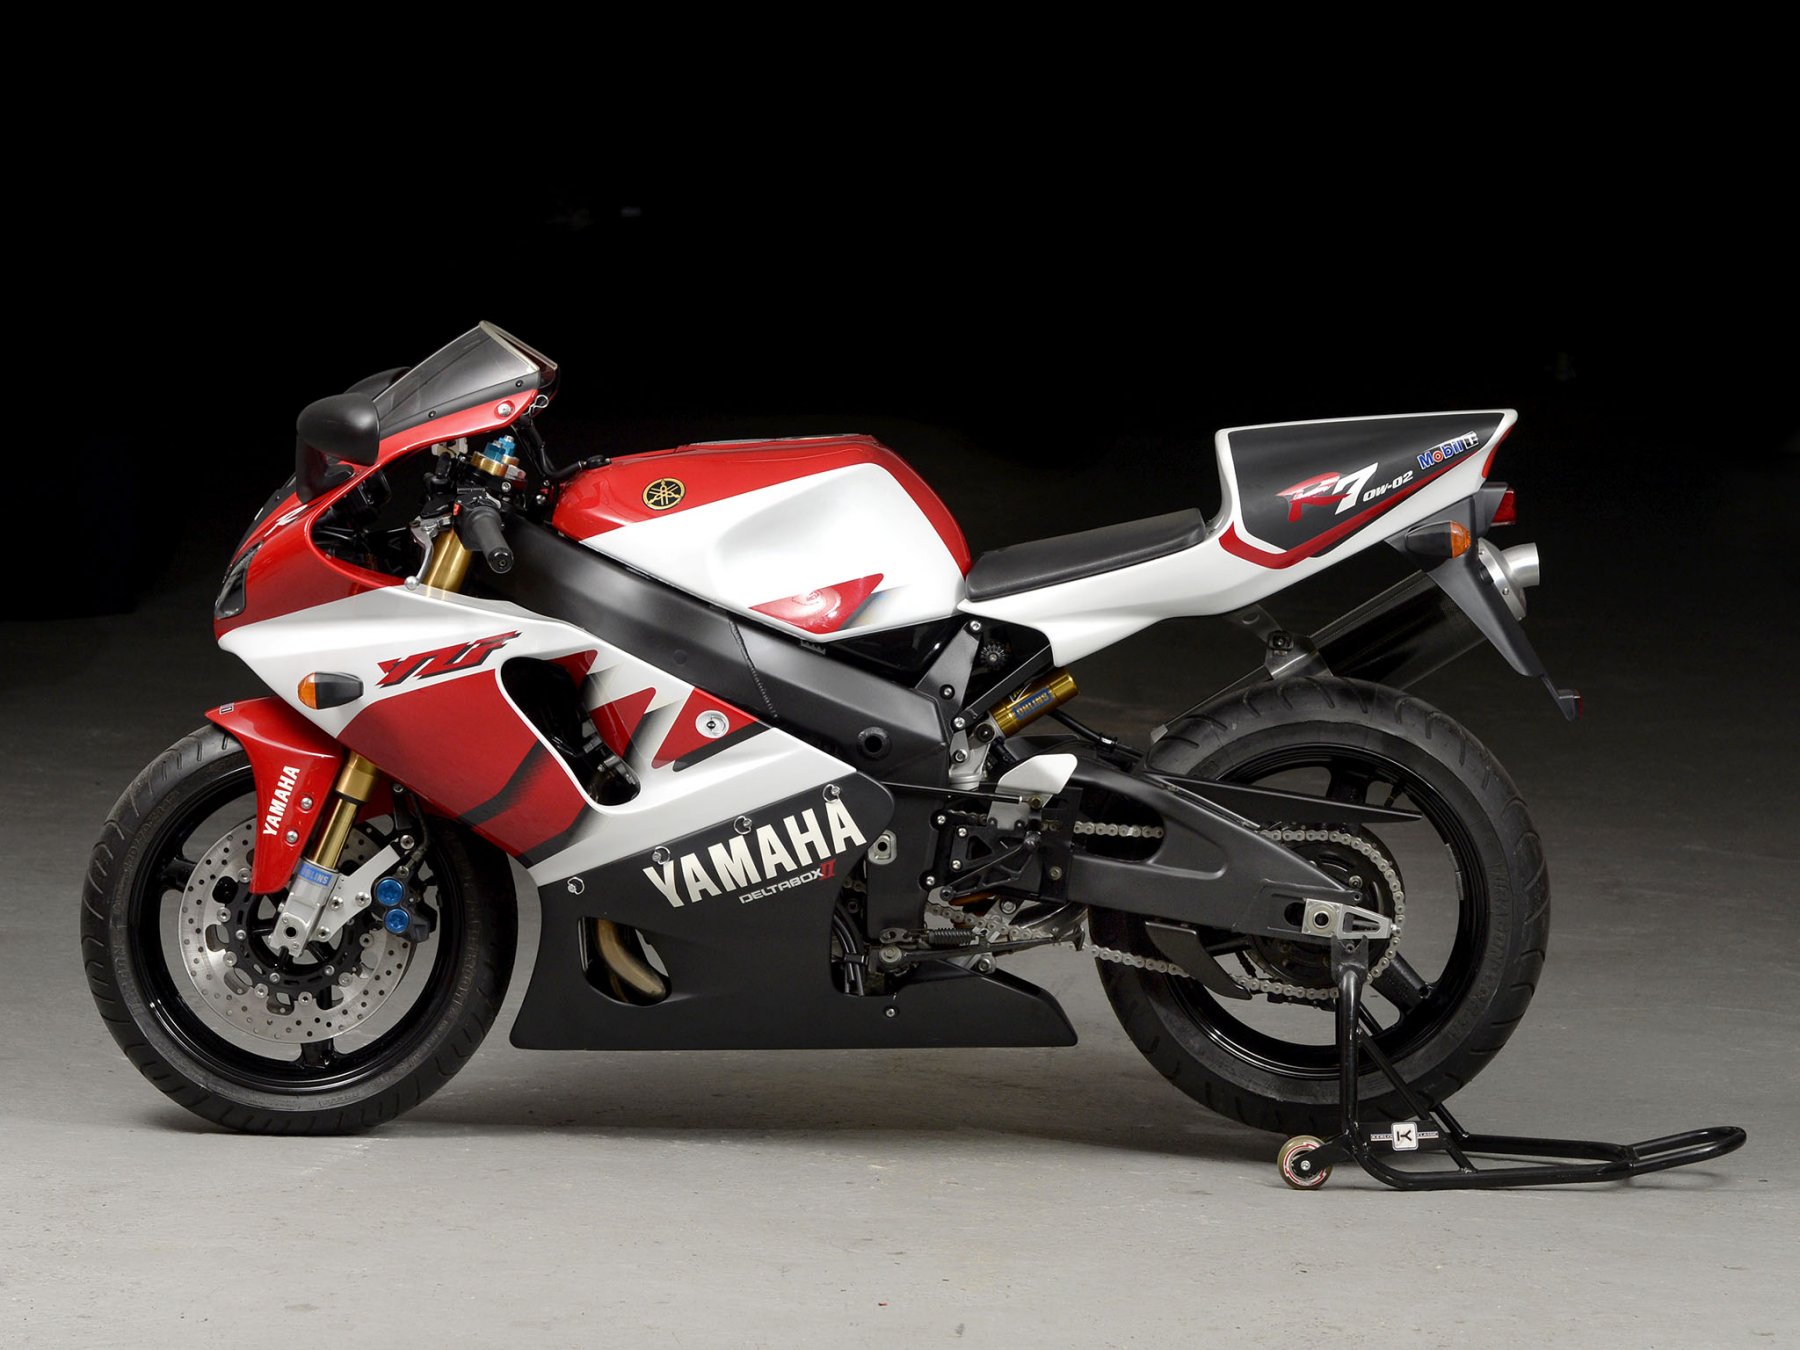 Yamaha YZF-R7, 2000 Motorcycles - Photos, Video, Specs, Reviews | Bike.Net